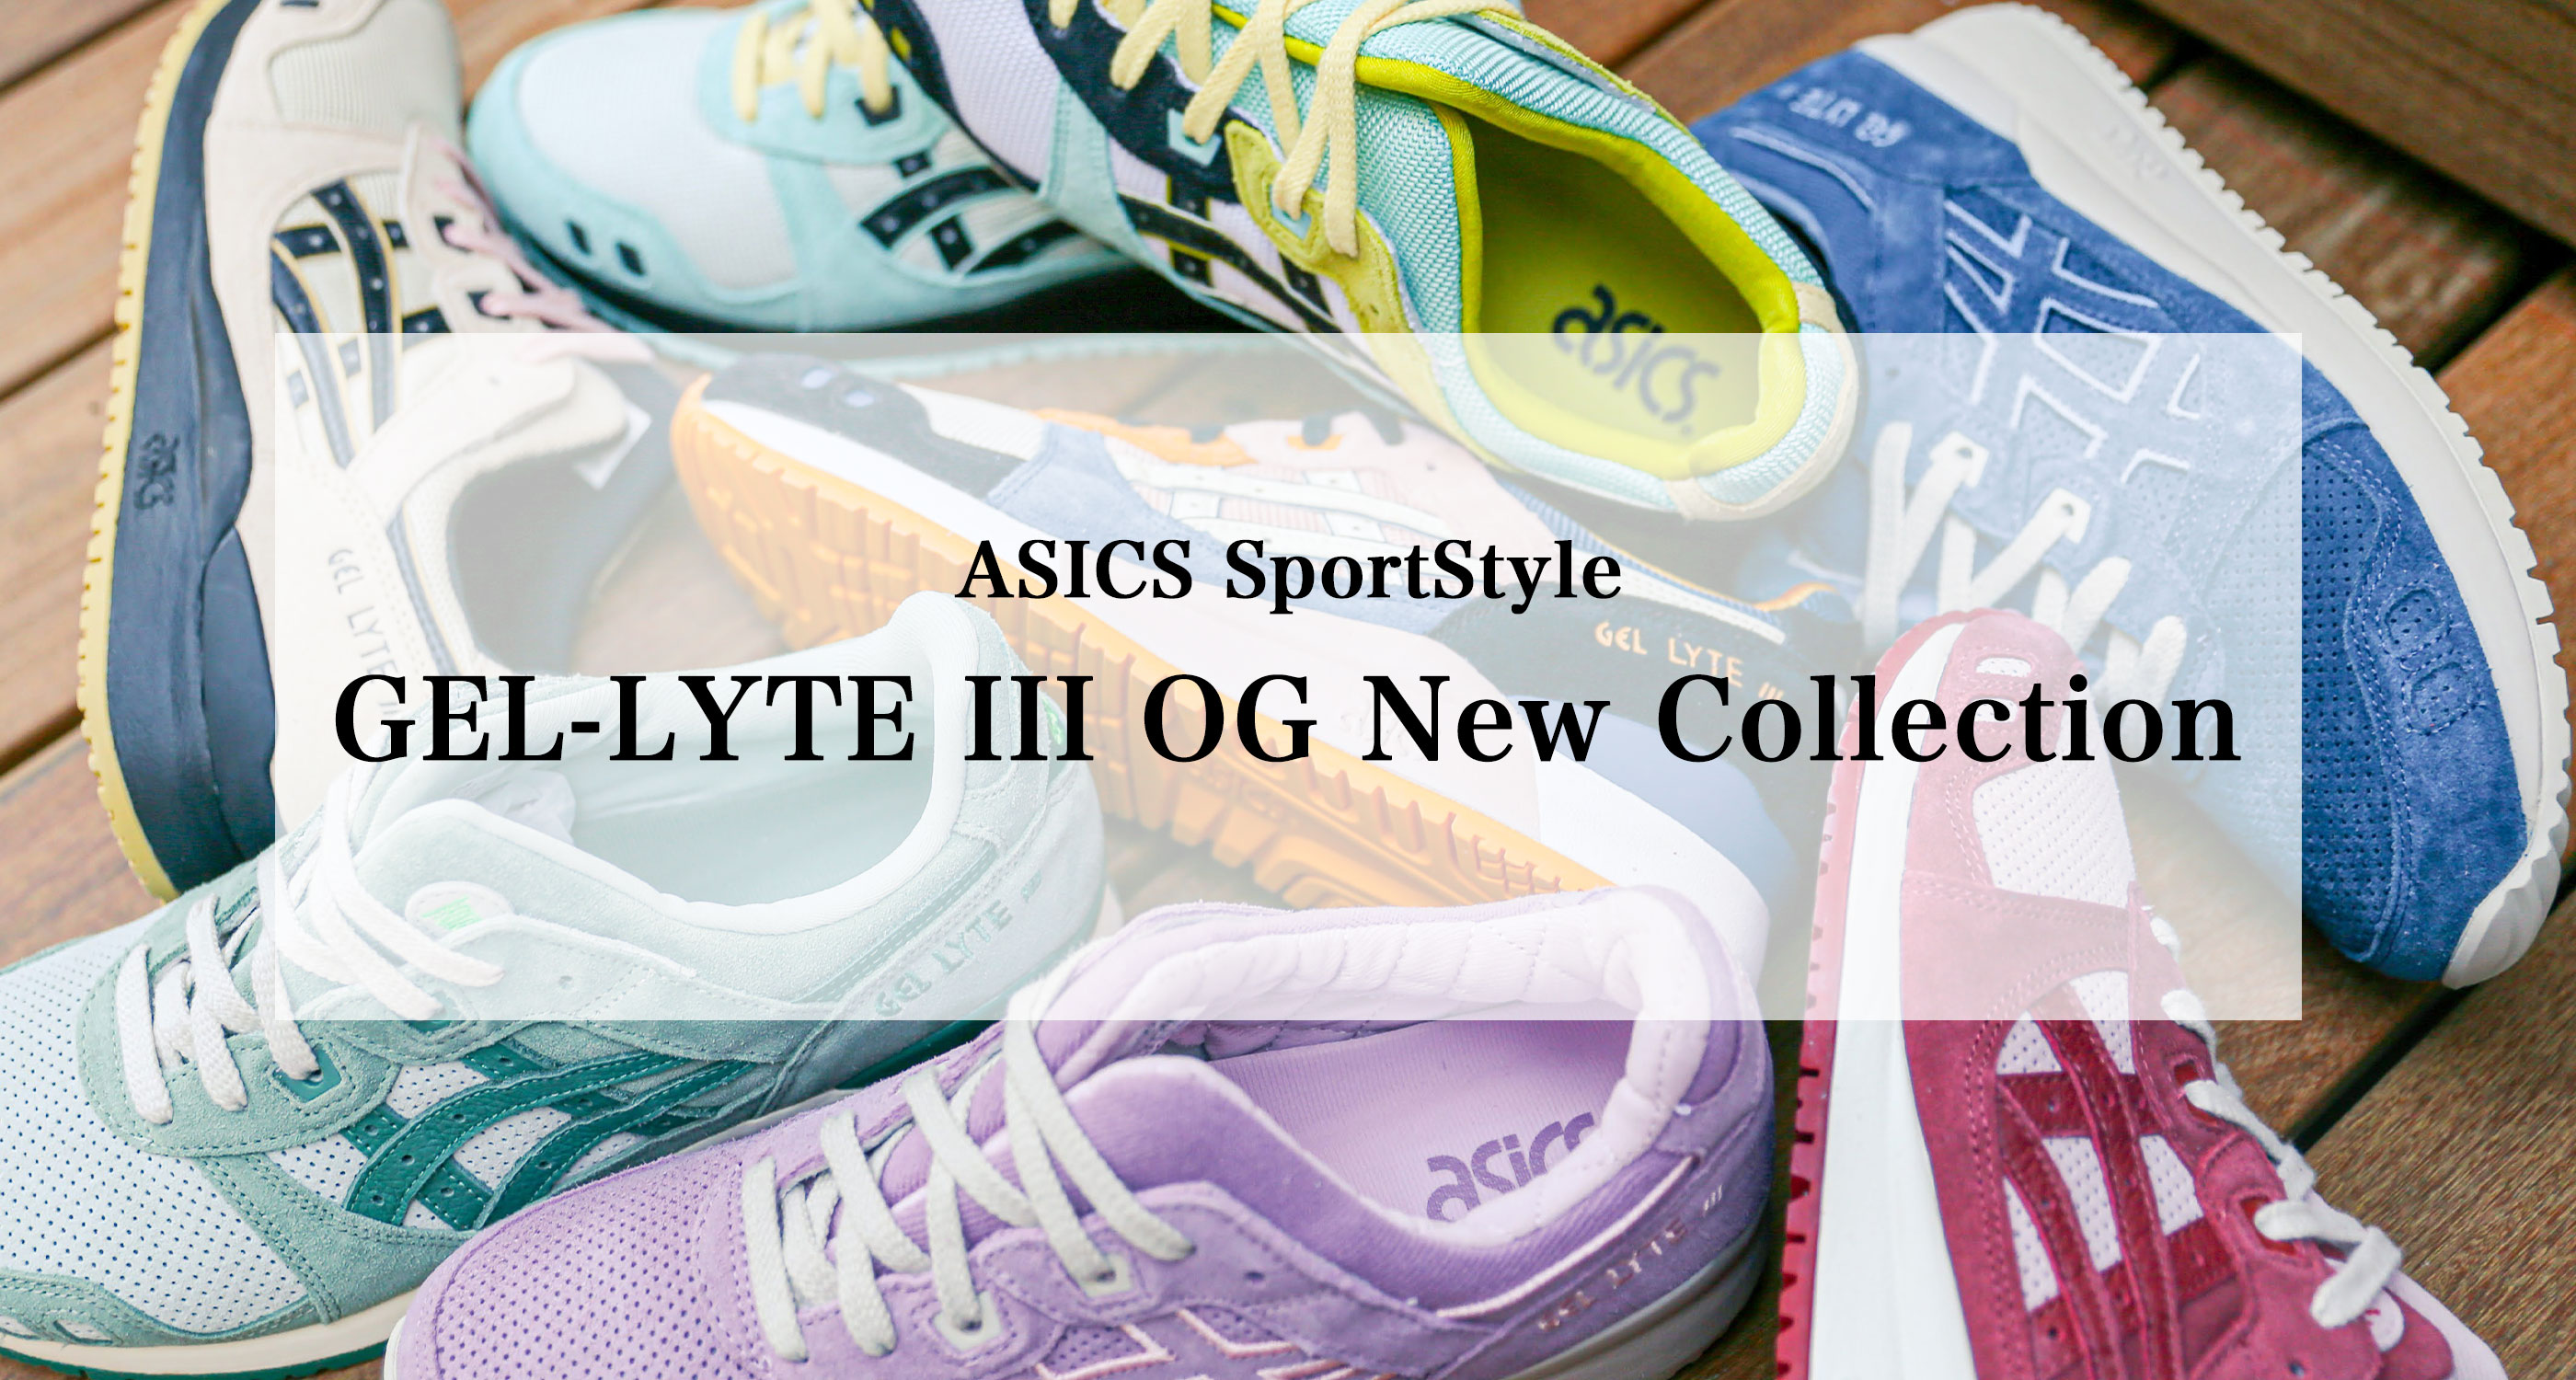 "ASICS SportStyle GEL-LYTE III OG New Collection"